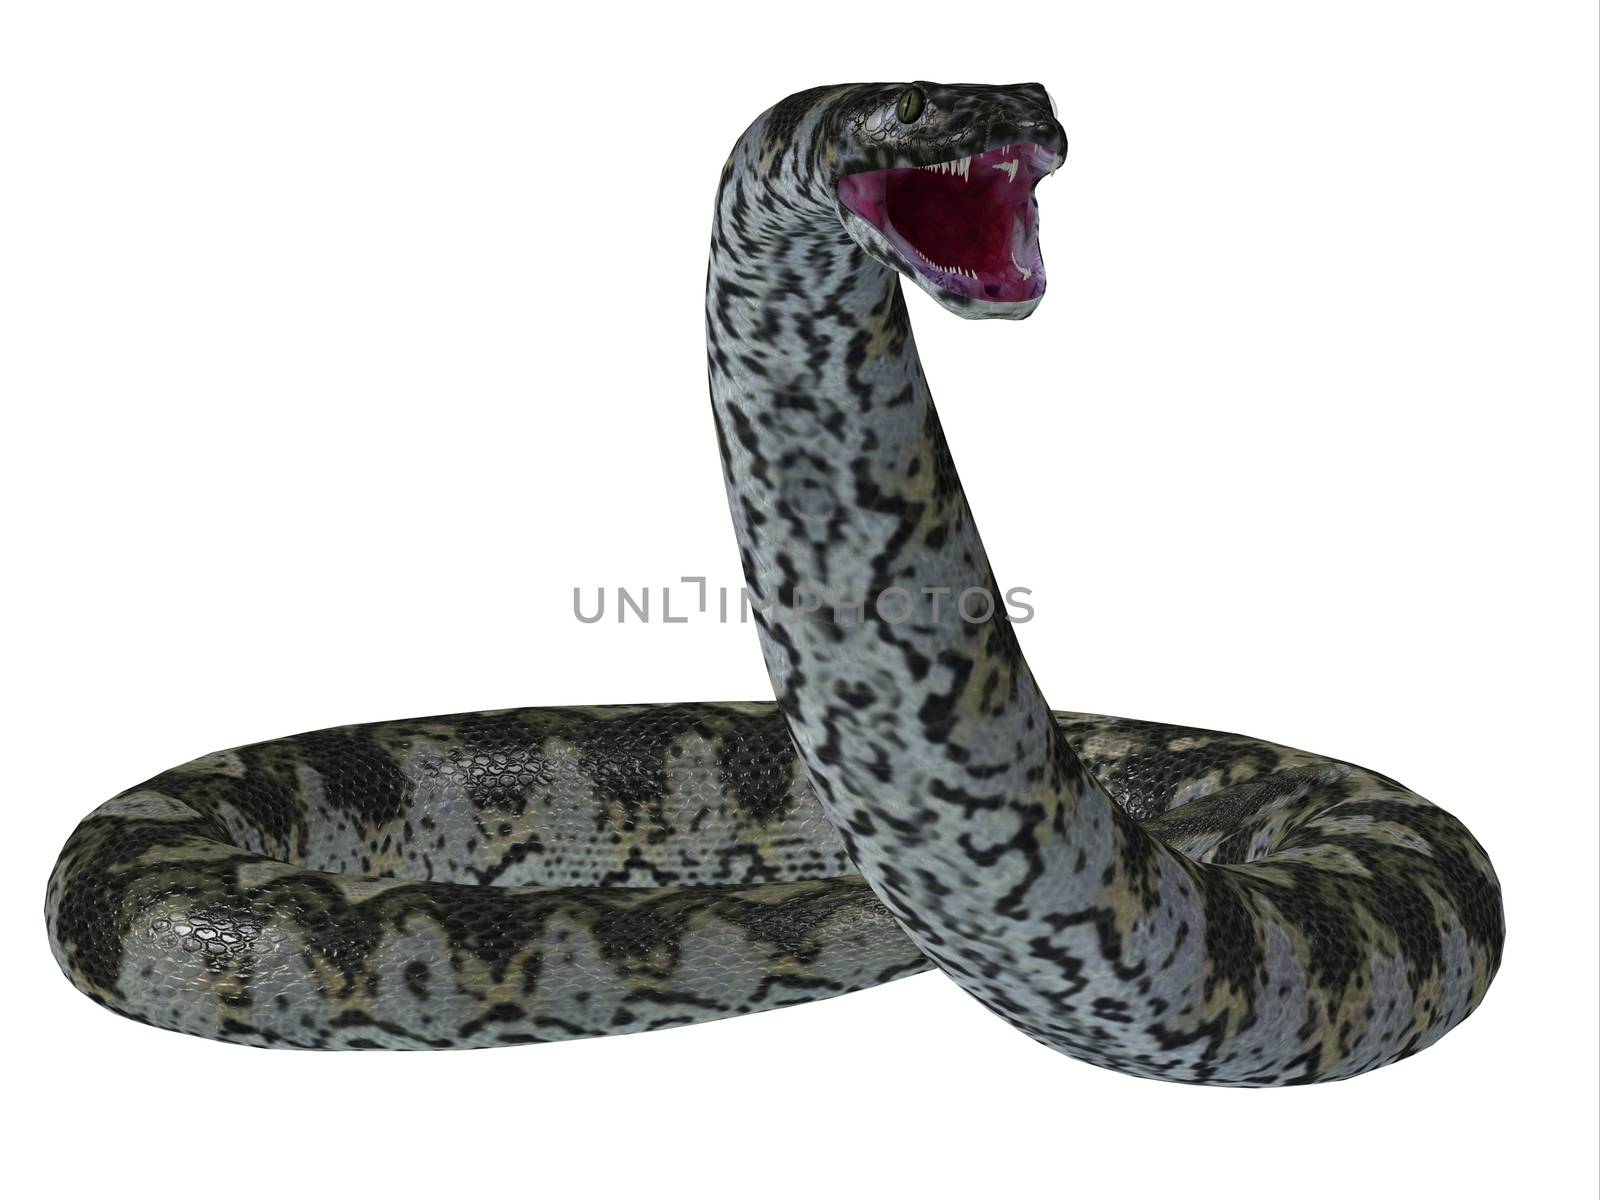 This predatory carnivorous Titanoboa snake lived during the Paleocene Period of Columbia, South America.